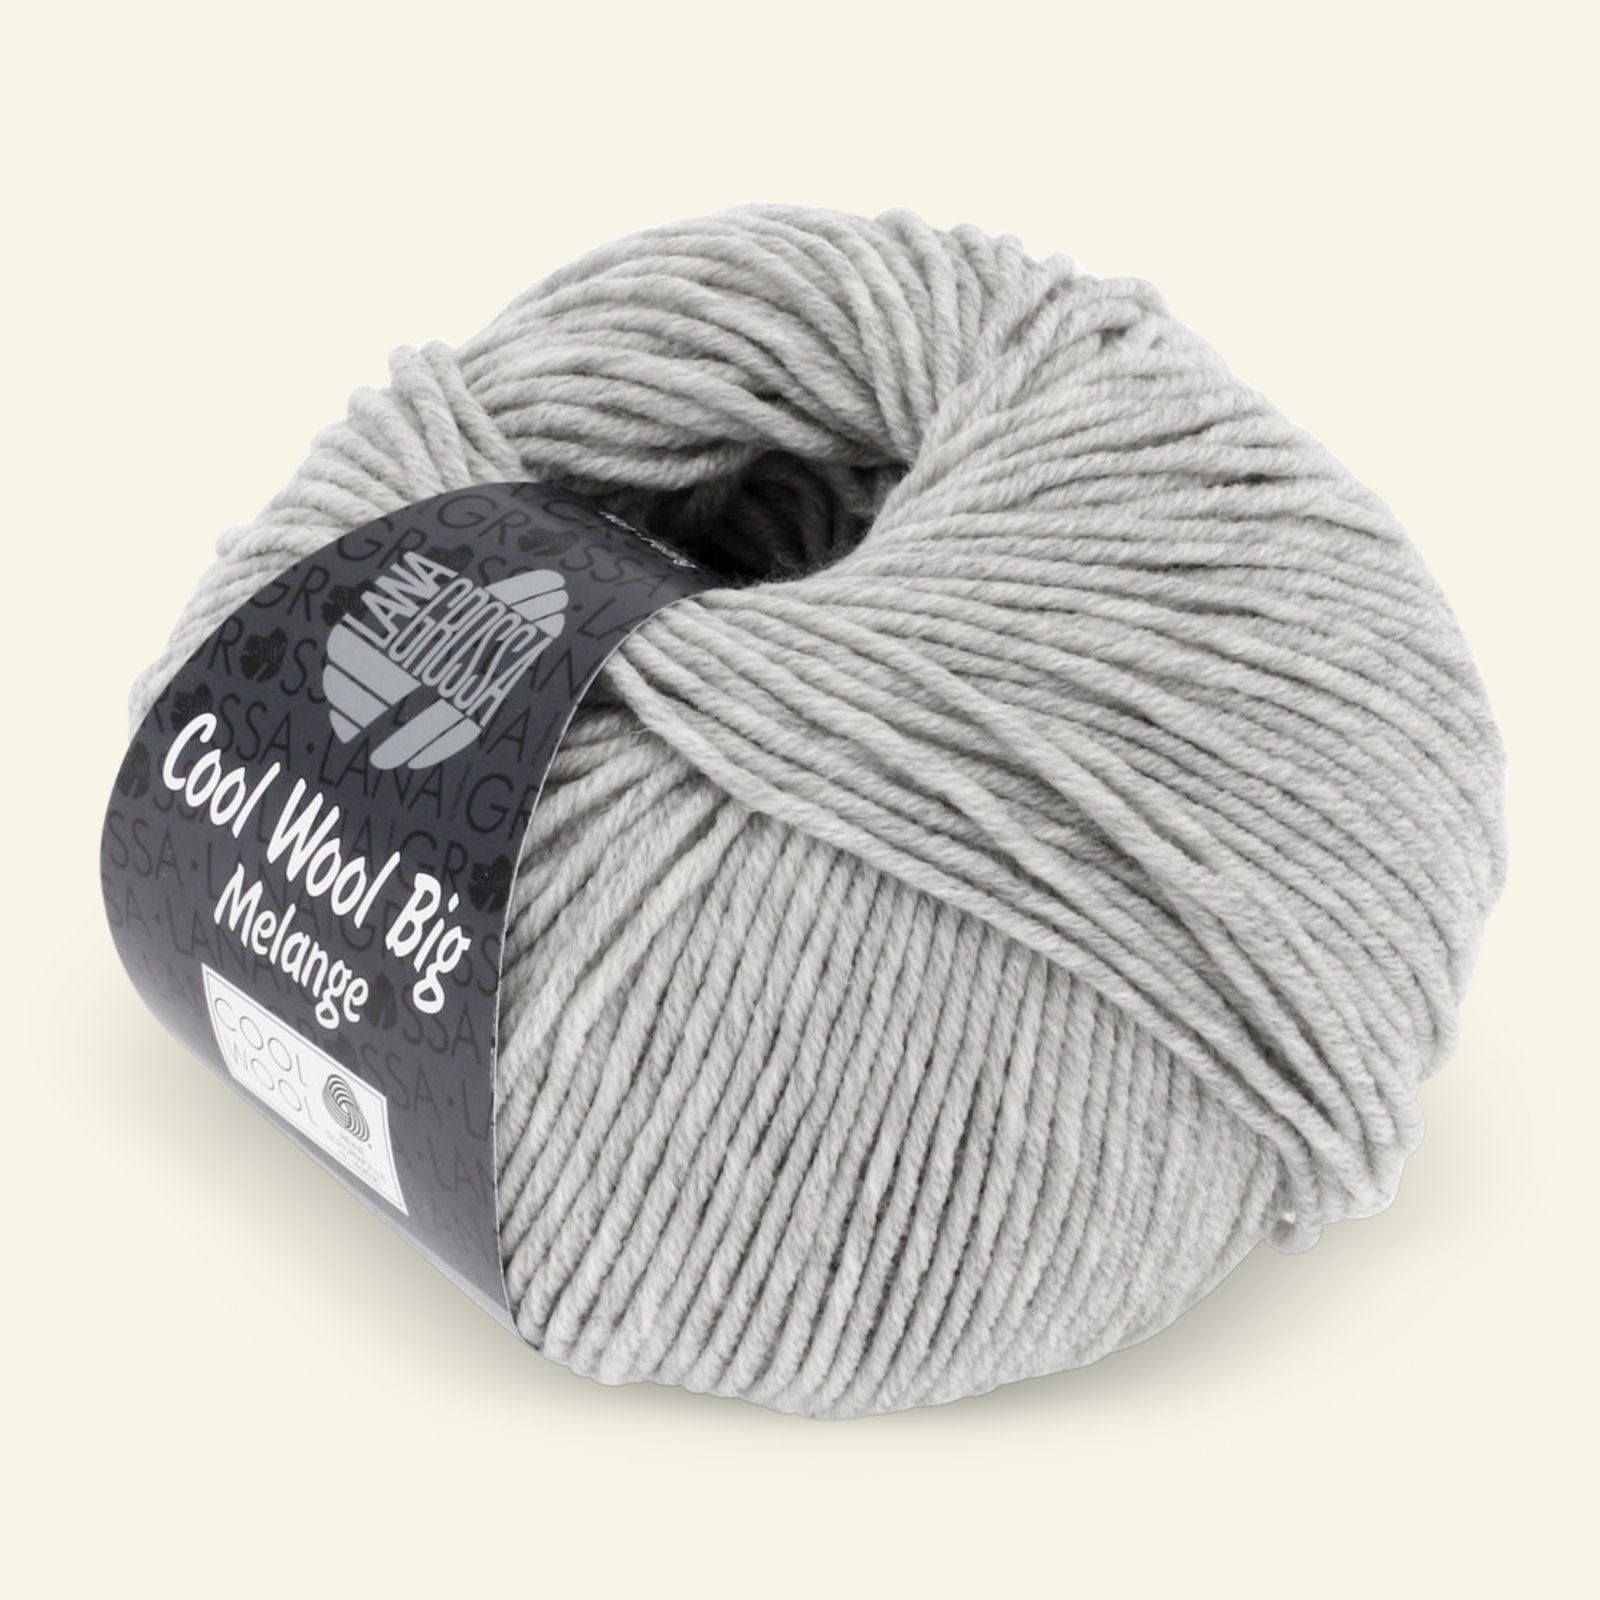 Lana Grossa, extrafine merino wool yarn "Cool Wool Big", light grey mel 90001085_pack